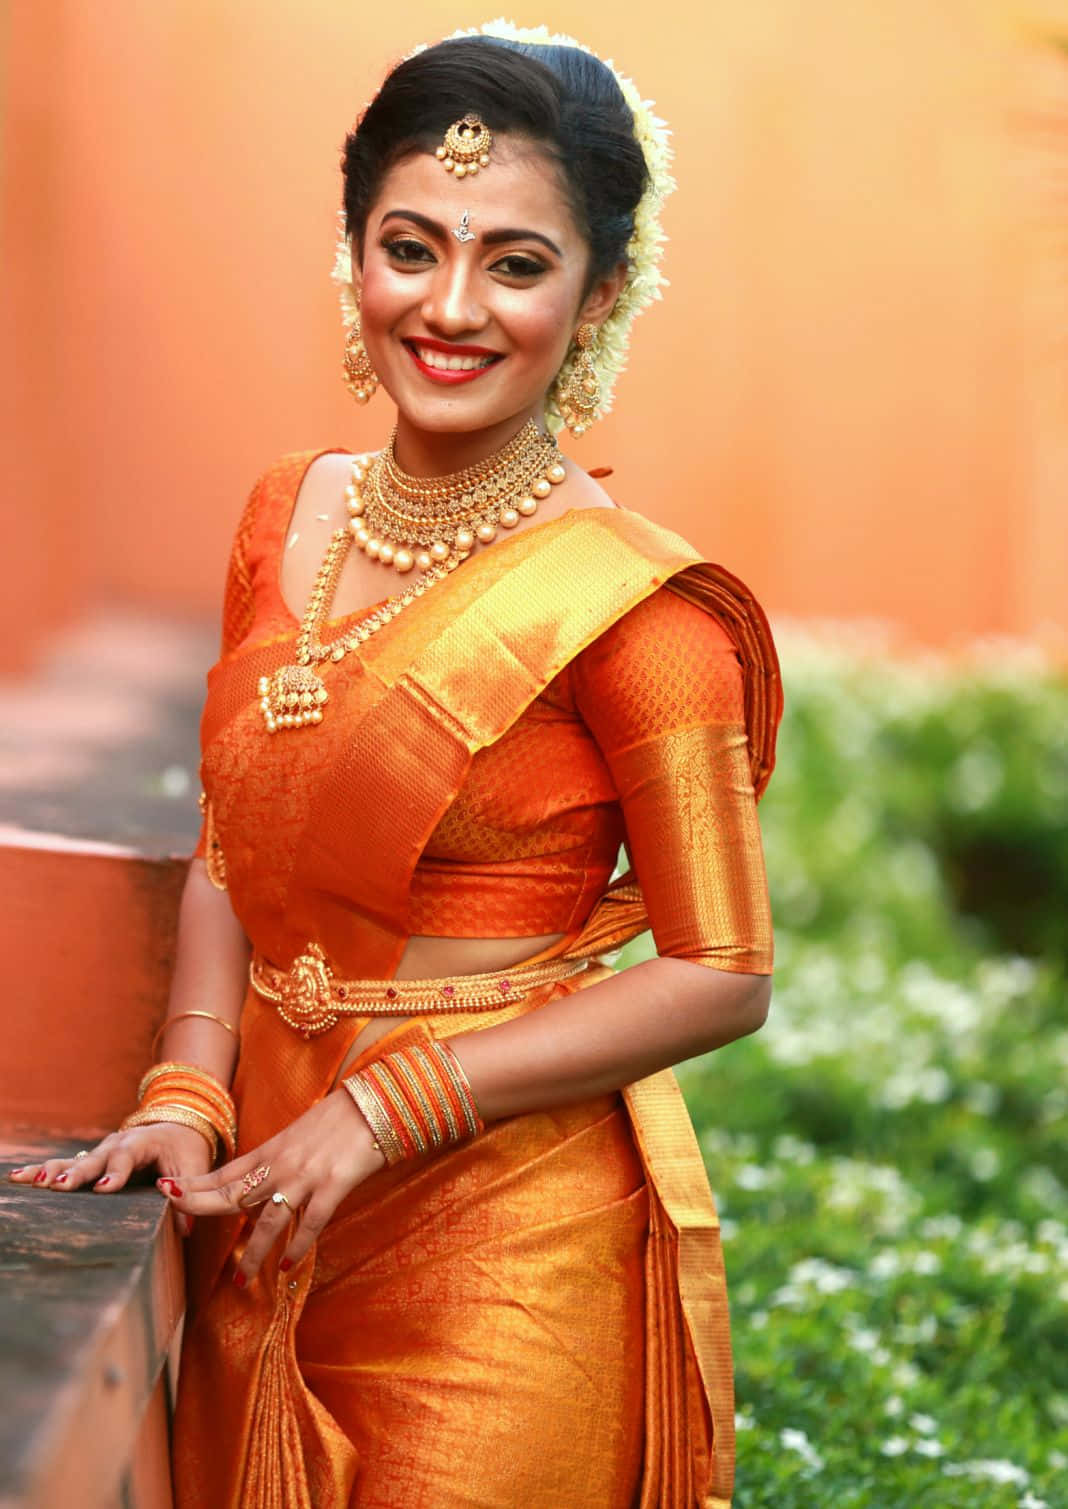 Indian Bride Orange Dress Picture